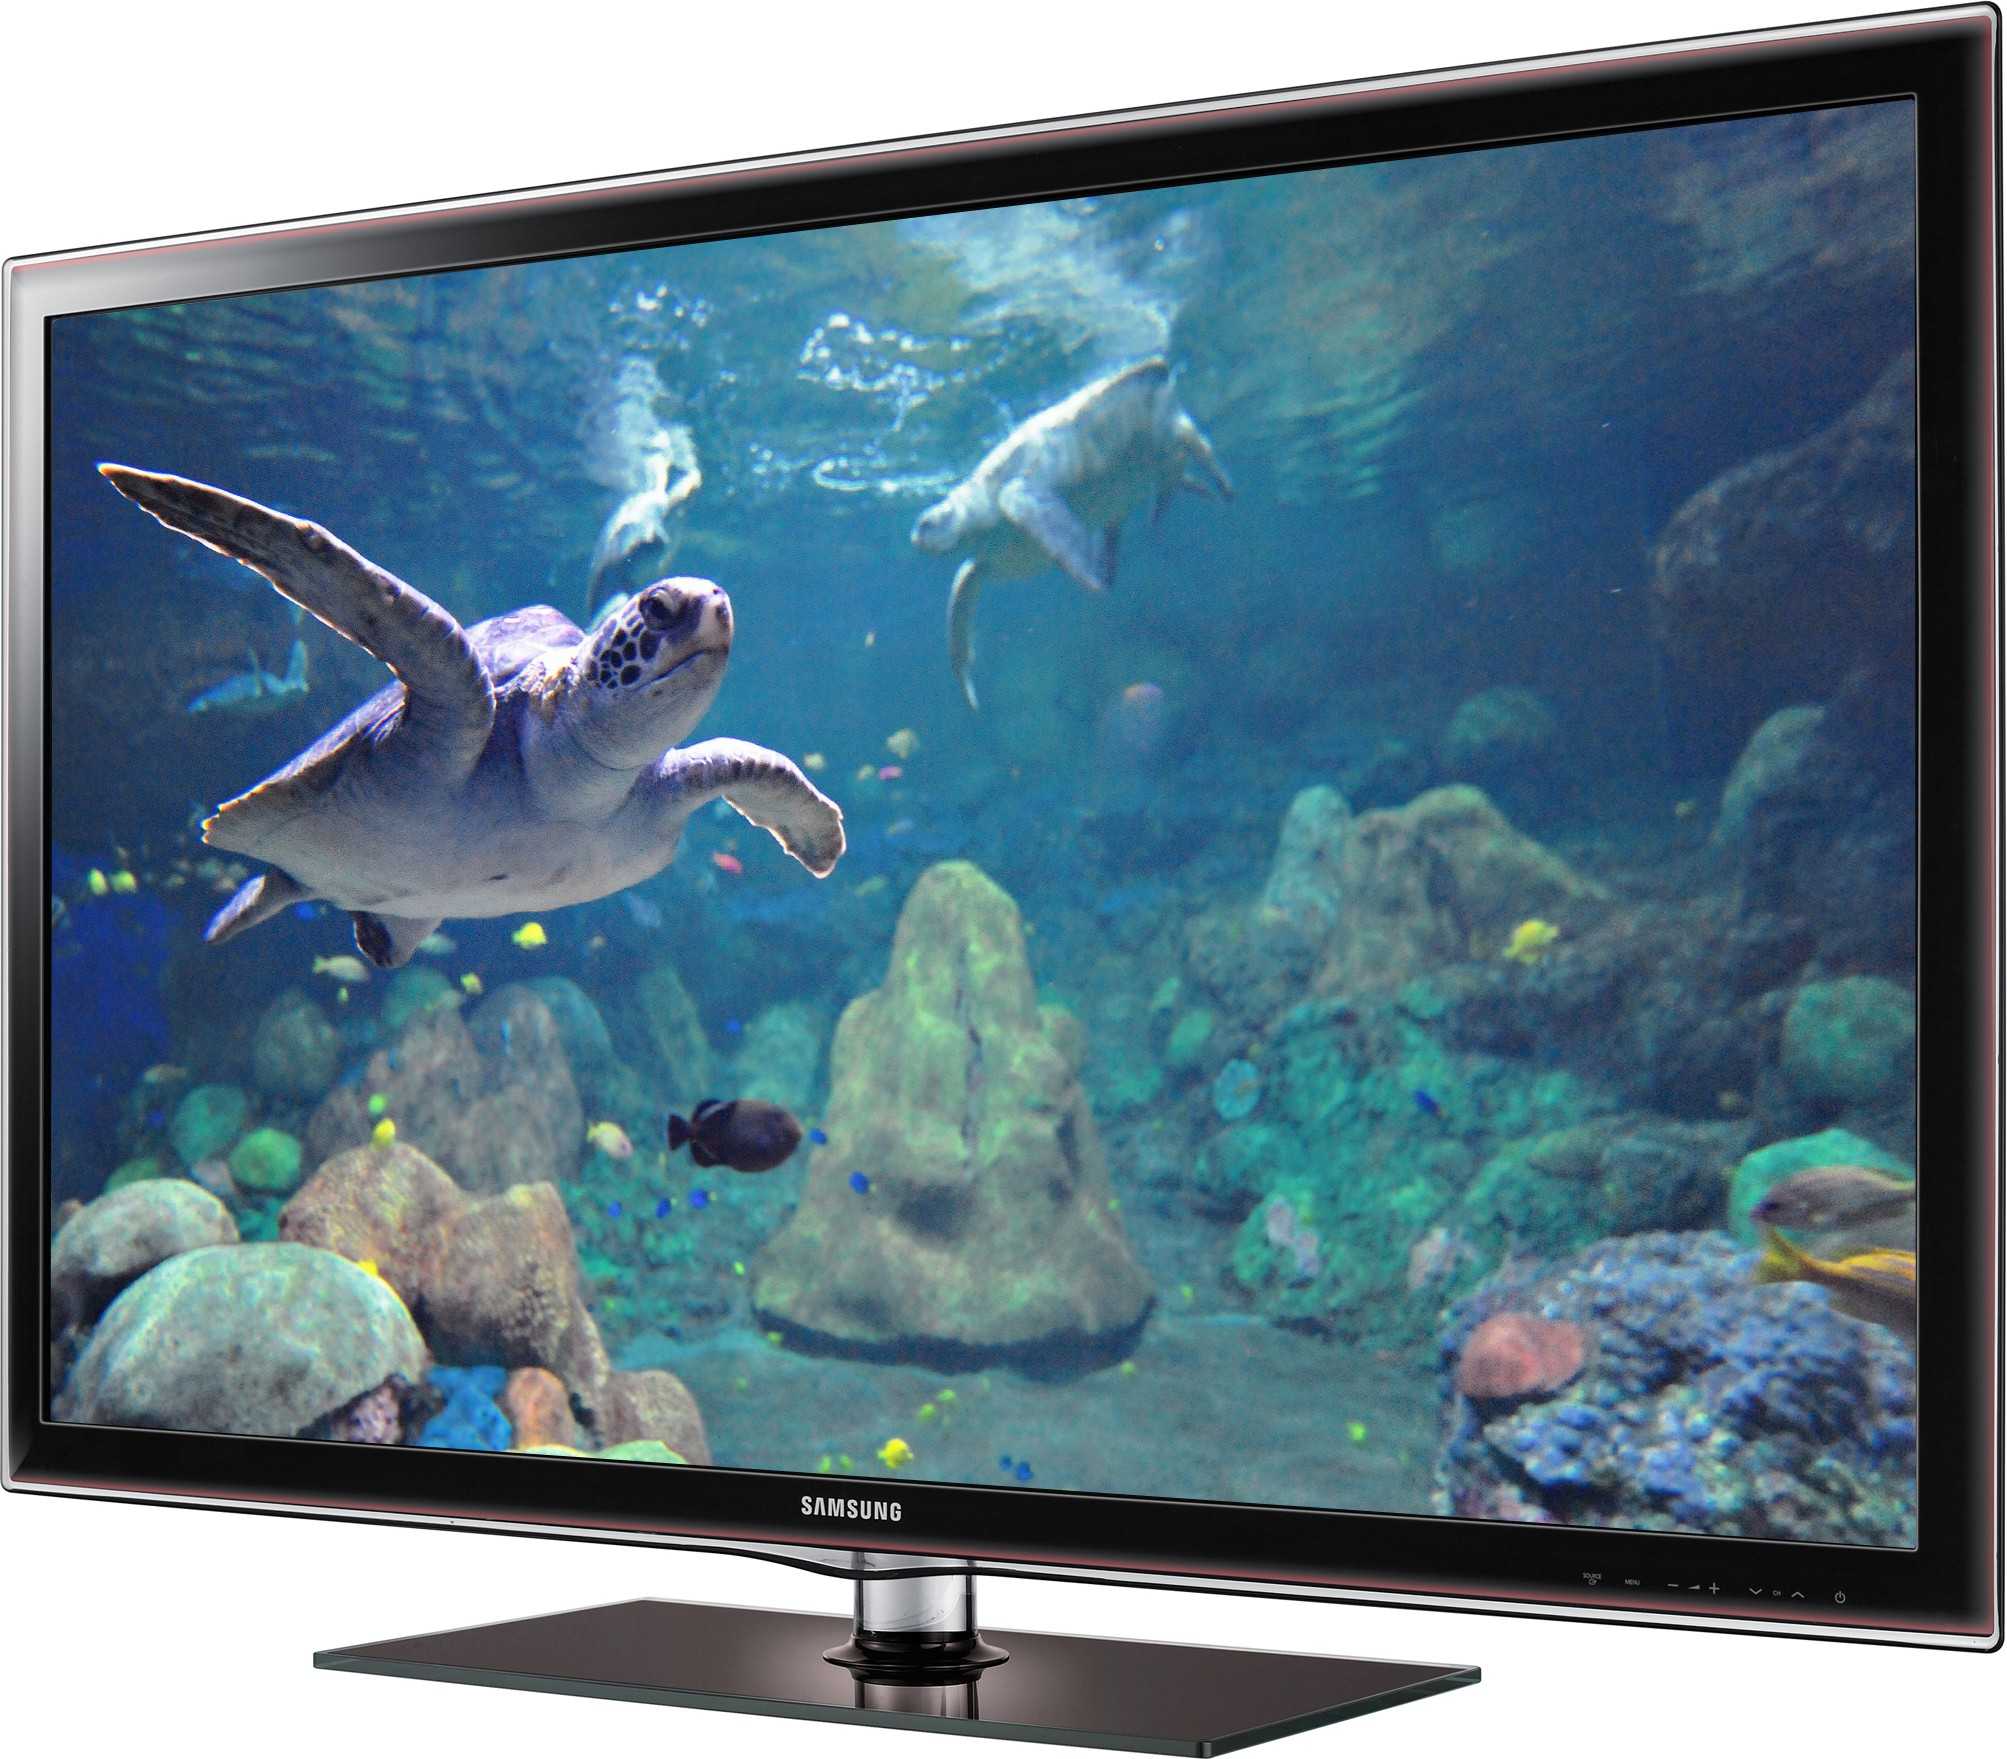 Full hd телевизор 58" samsung ue58j5200 — купить, цена и характеристики, отзывы